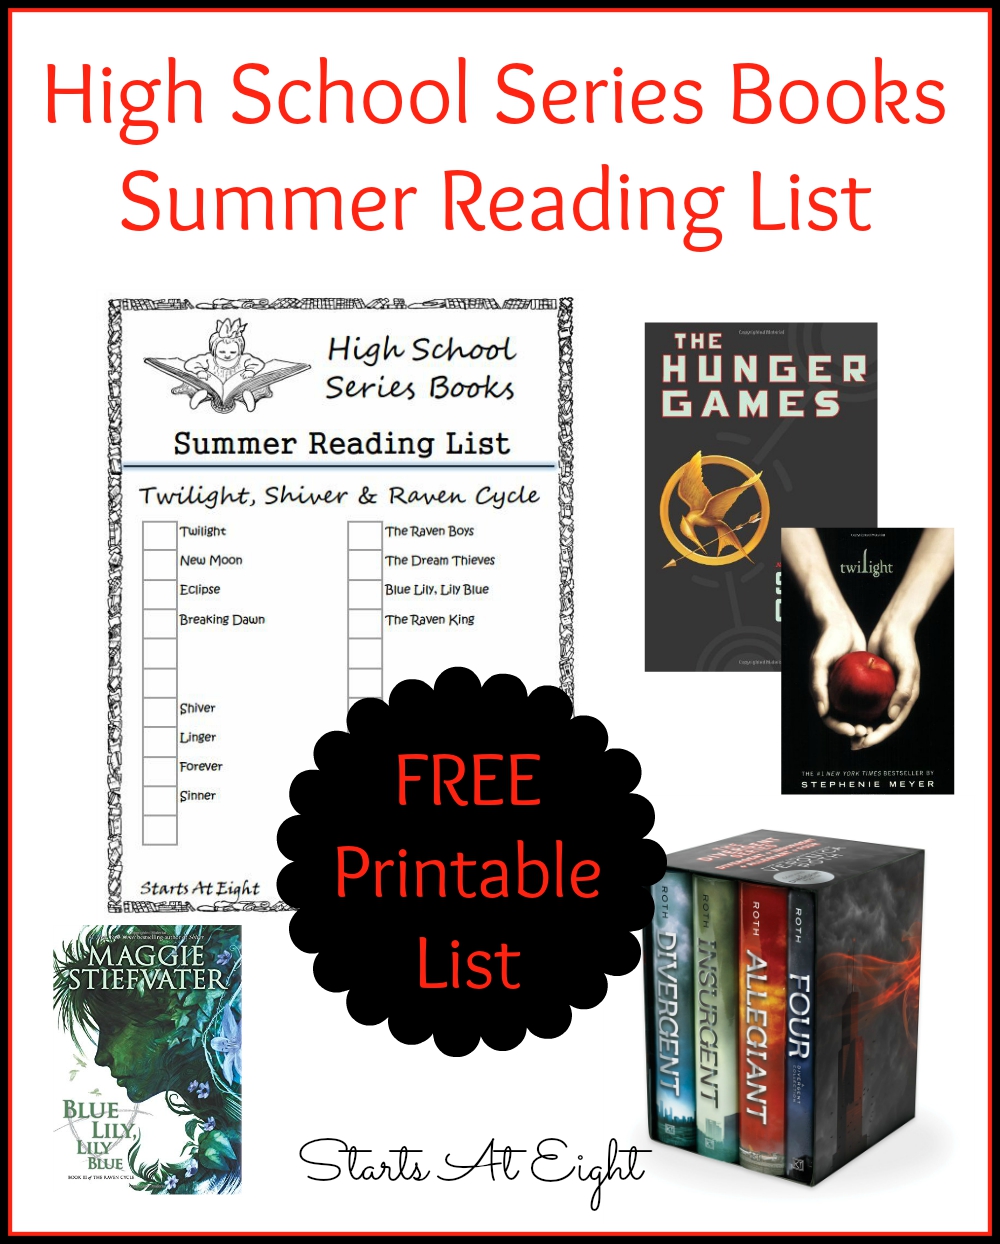 High School Series Books Summer Reading List FREE PRINTABLE